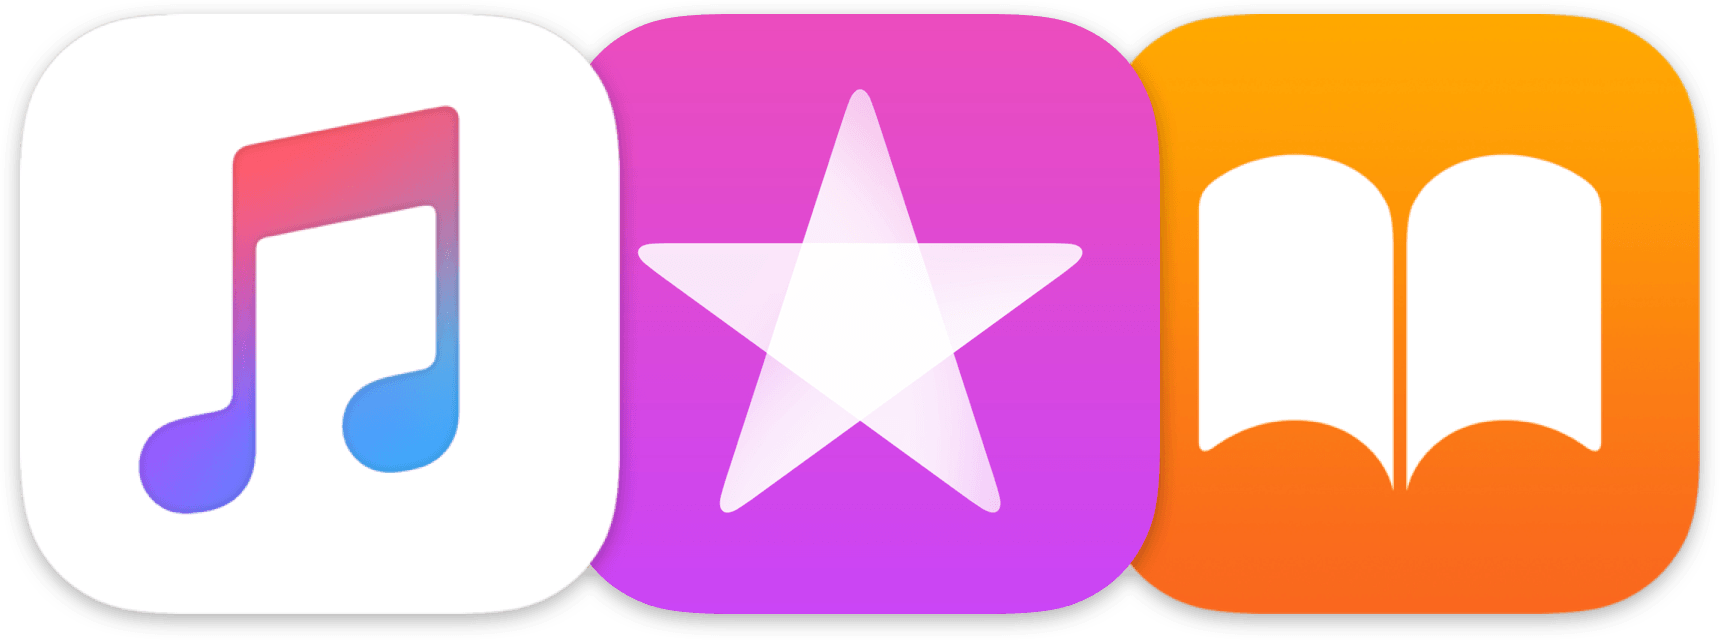 Apple iTunes Logo - iTunes and Apple Books Store Badges